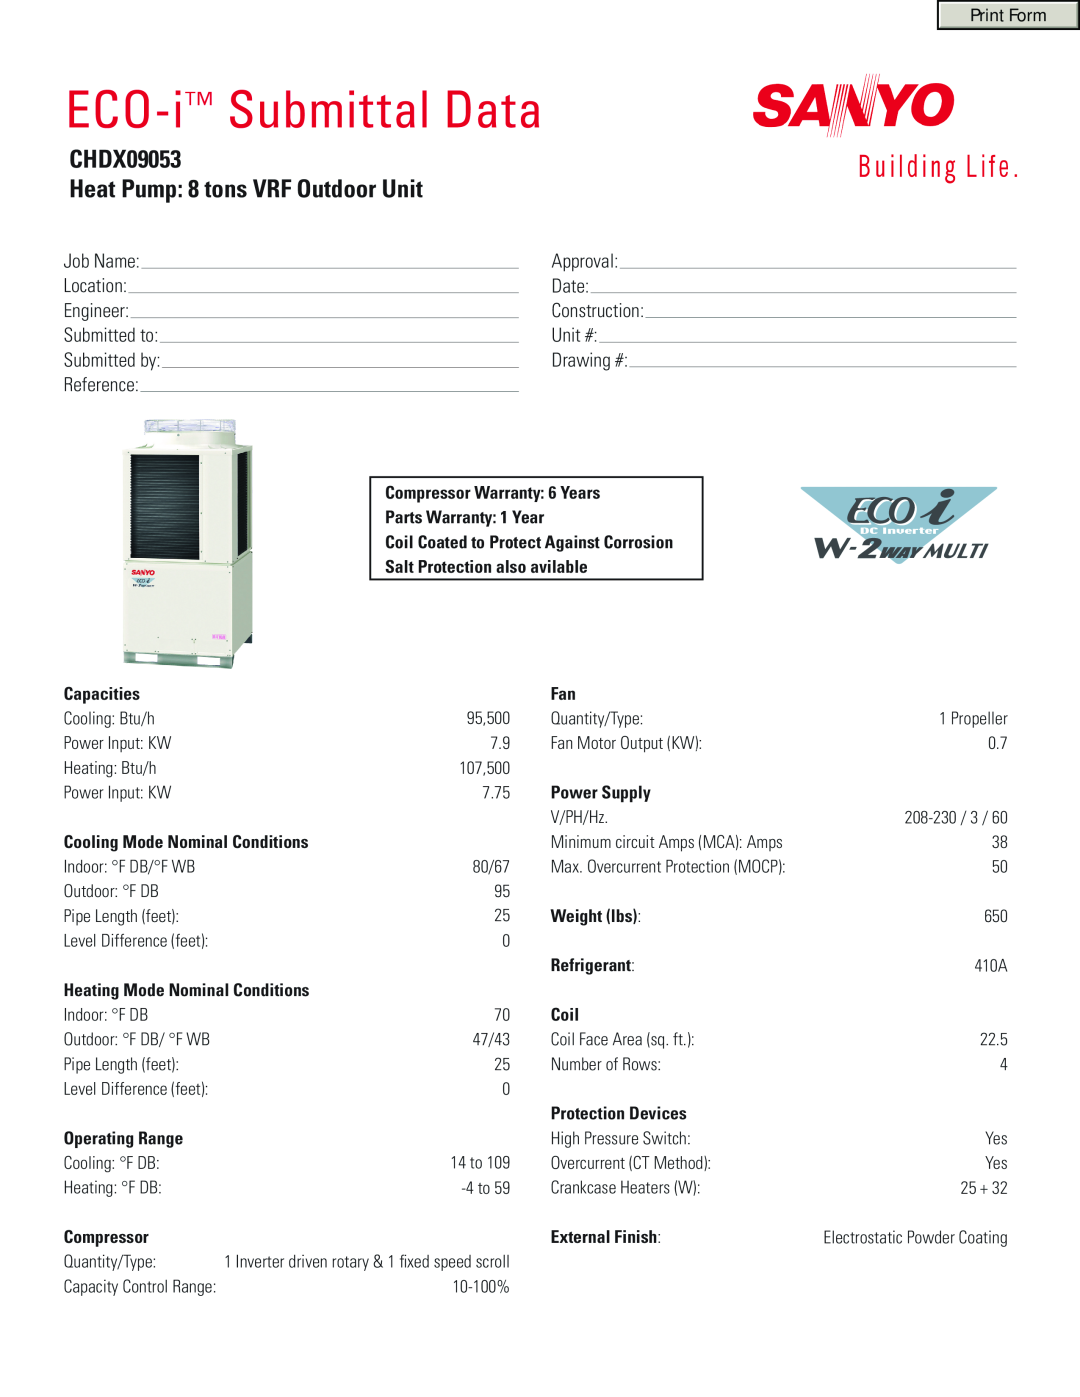 Sanyo warranty ECO-i Submittal Data, CHDX09053 Heat Pump 8 tons VRF Outdoor Unit 